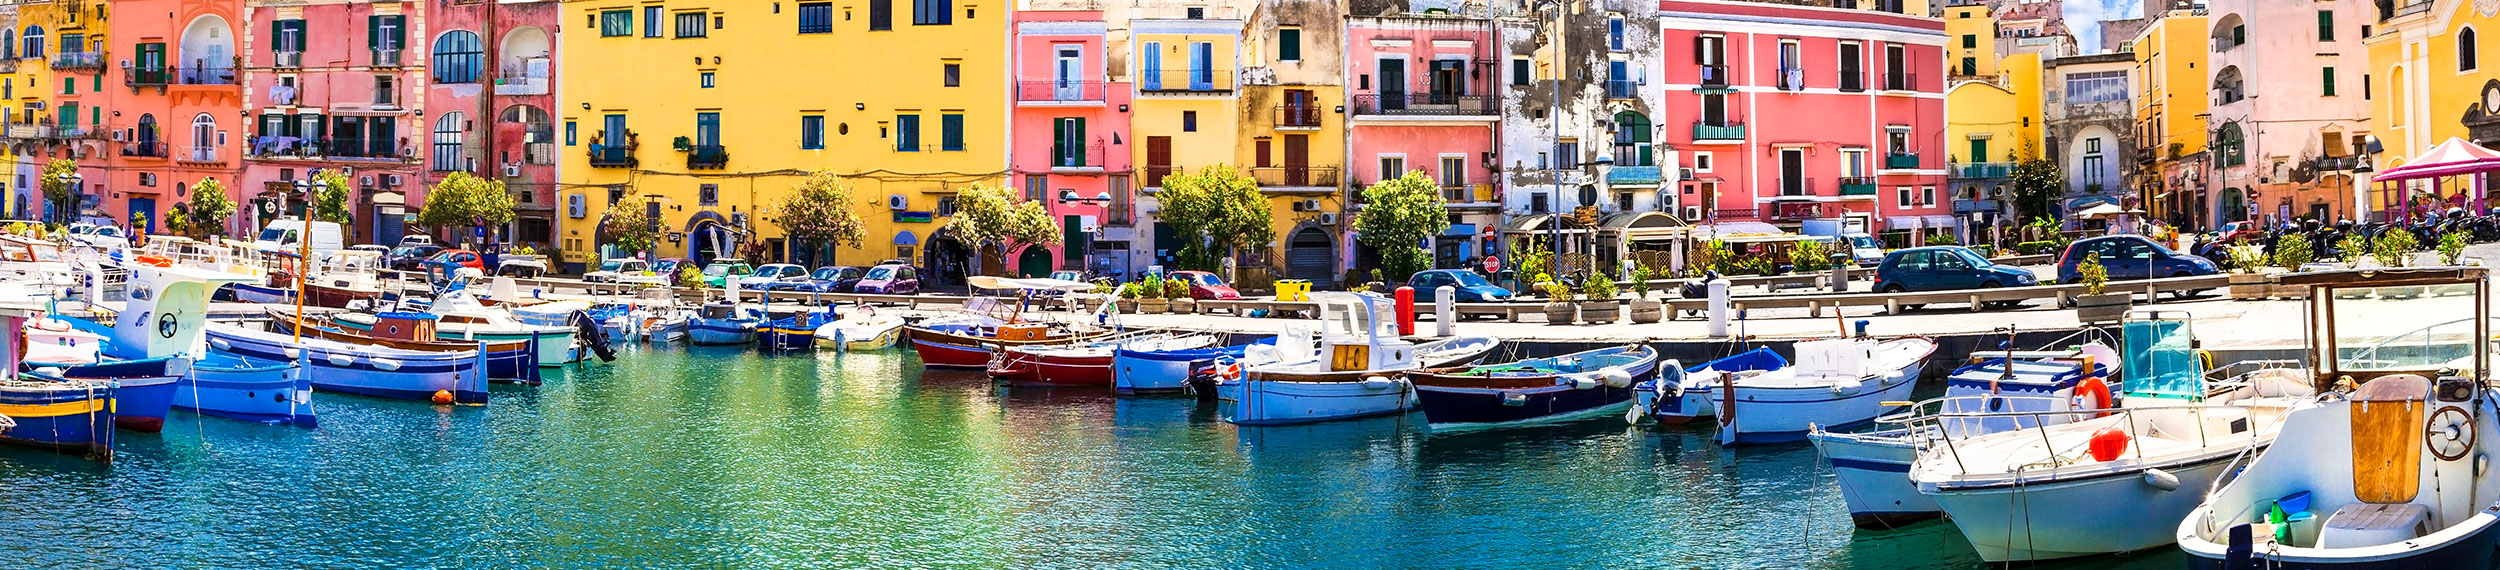 Boat dock area near colorful houses in Terra Murata, Italy. 